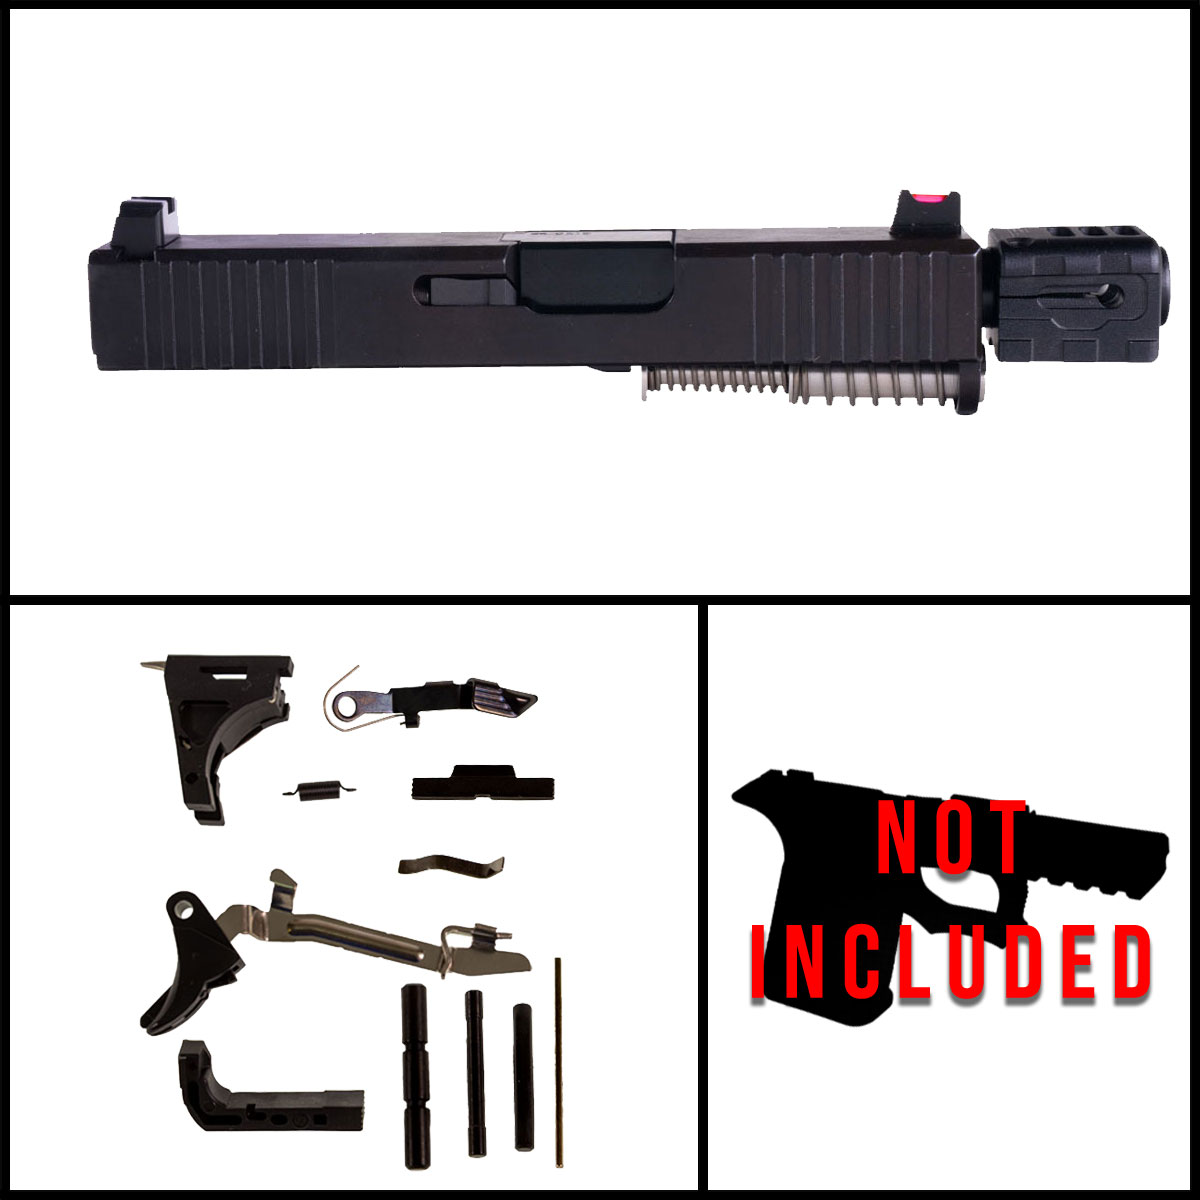 OTD 'Twenty-six w/ Strike Industries Compensator' 9mm Full Pistol Build Kit (Everything Minus Frame) - Glock 26 Gen 1-2 Compatible